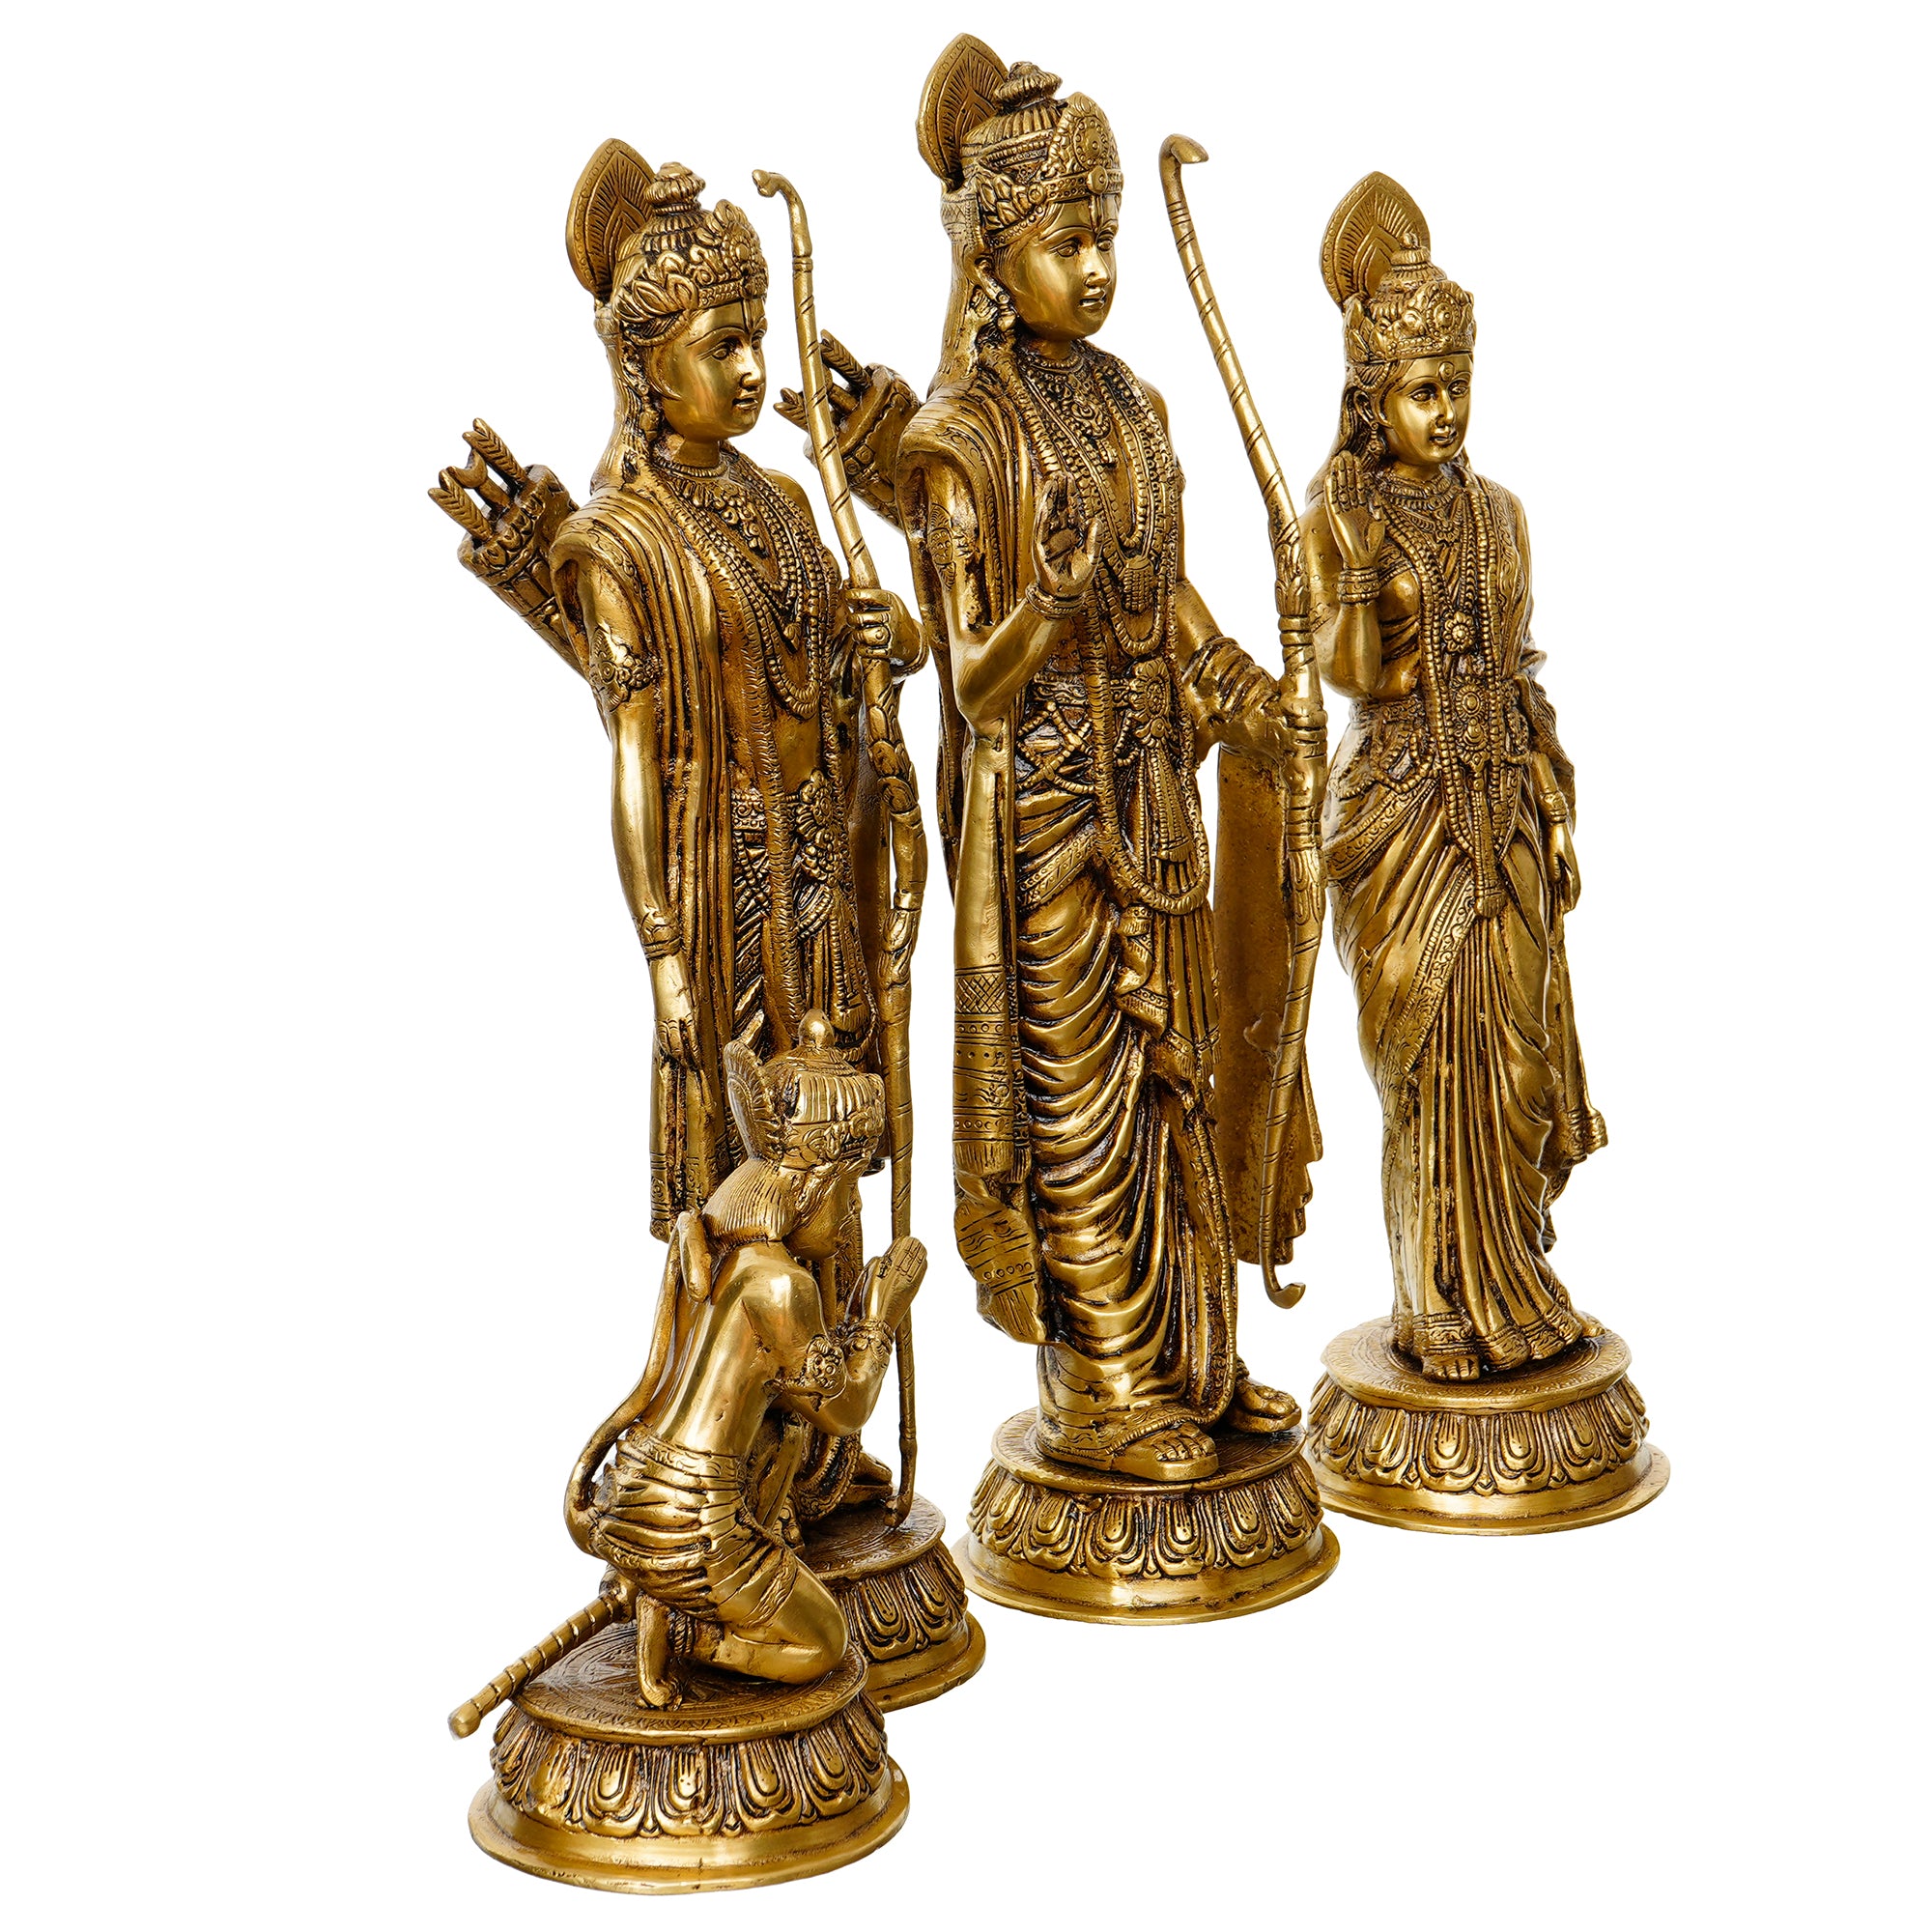 Golden Brass Handcrafted Ram Darbar - Lord Ram, Sita and Laxman Along With Lord Hanuman Idols 6